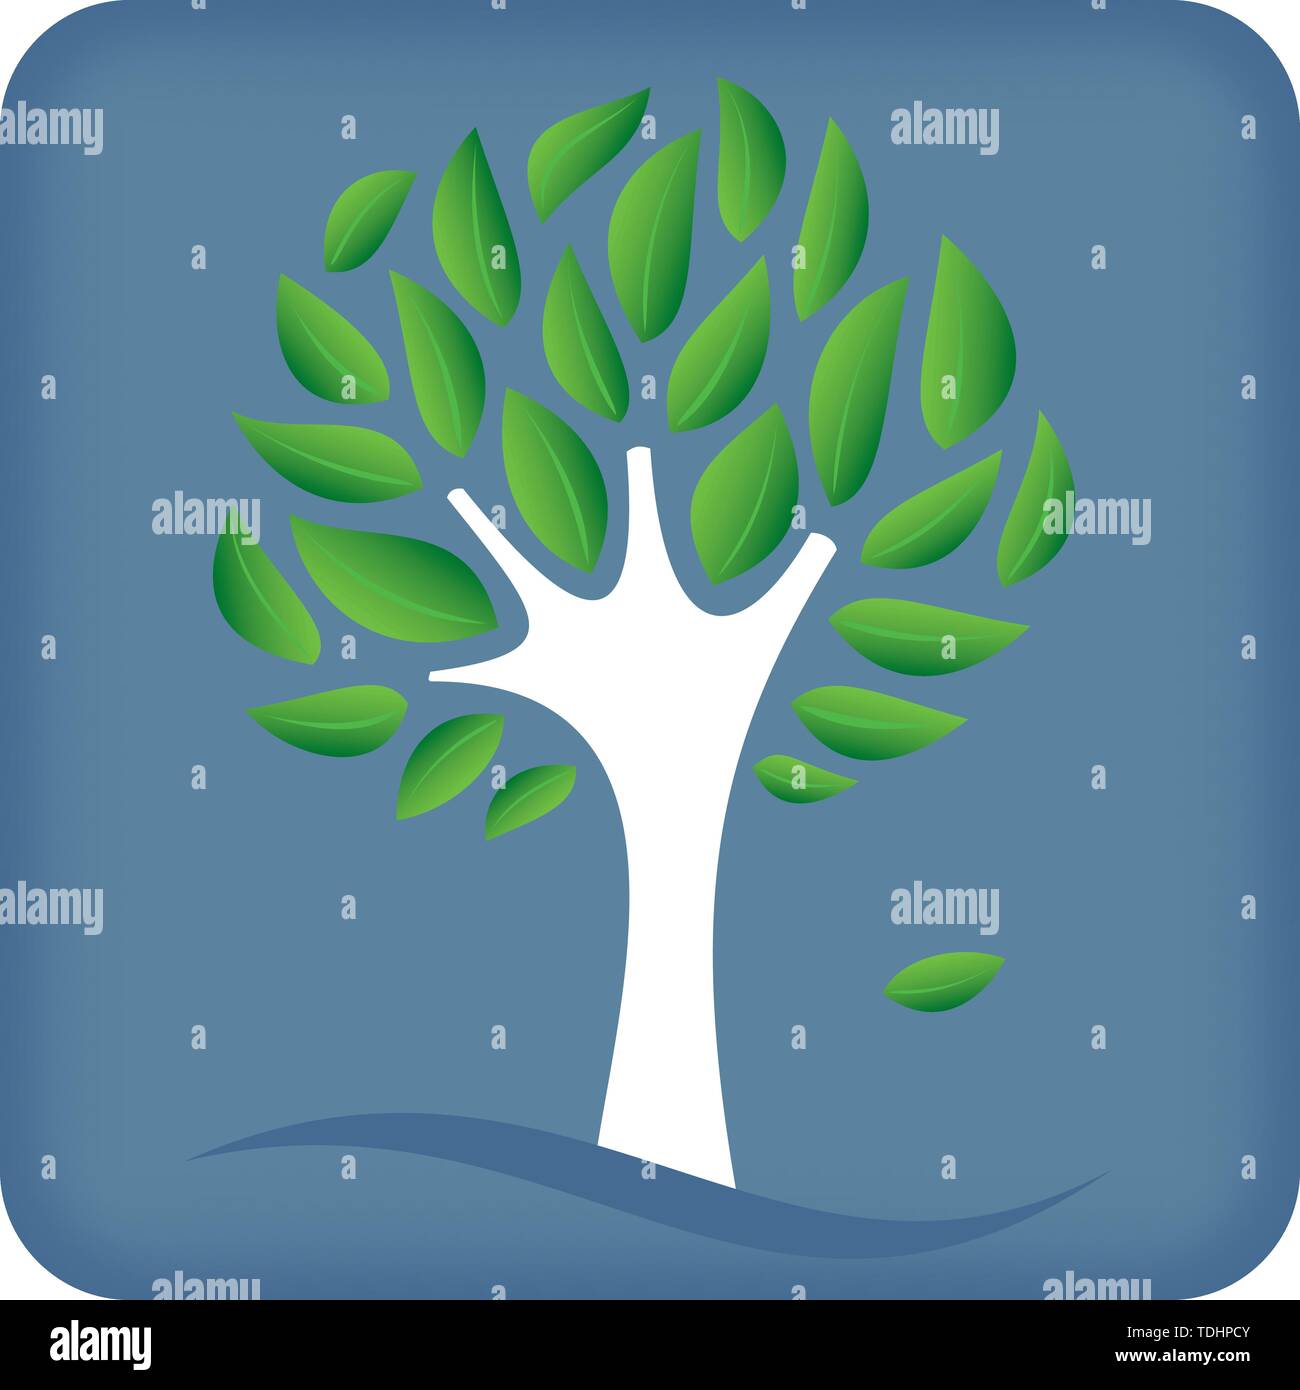 Vector illustration d'un arbre avec des feuilles feuilles de flamme. Illustration de Vecteur